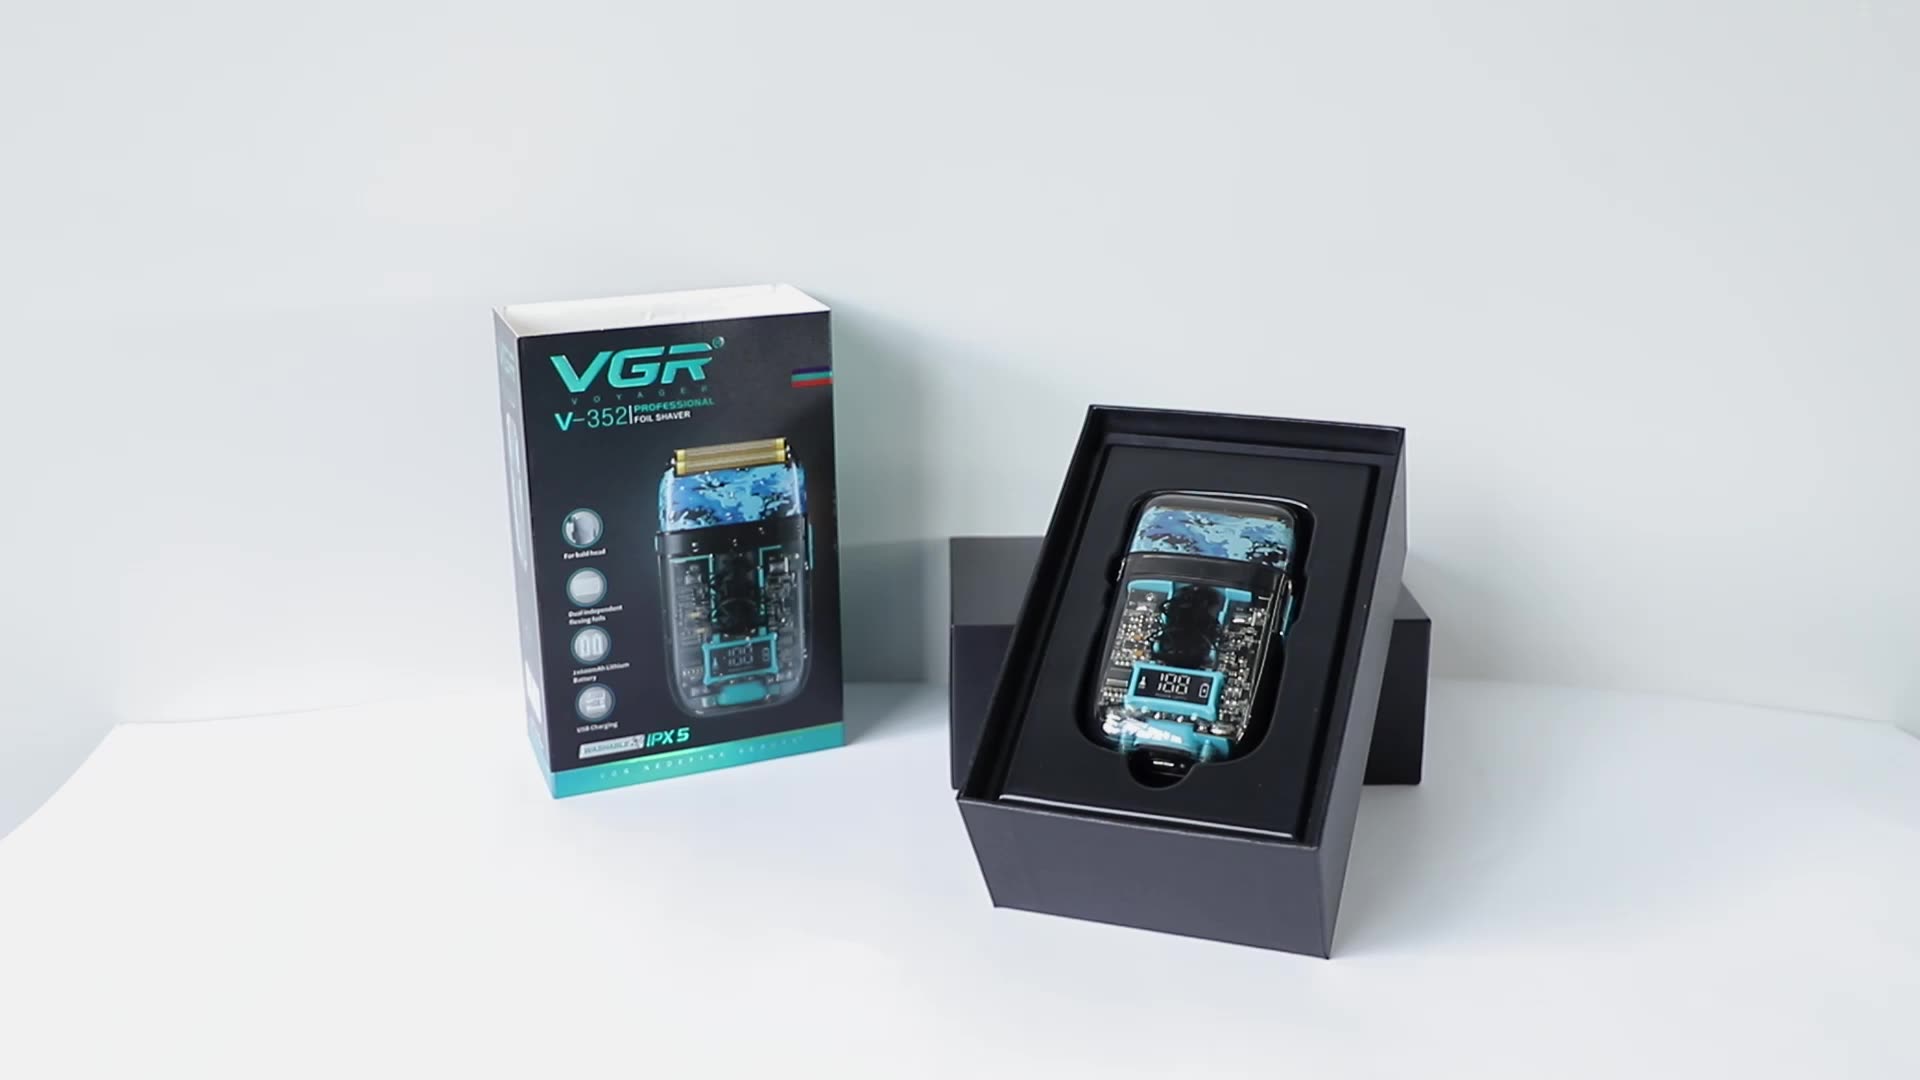 VGR V-352 FOIL FOIL HEAR HAID Shaver Machine Machine Shavers Professional Electric For Men1